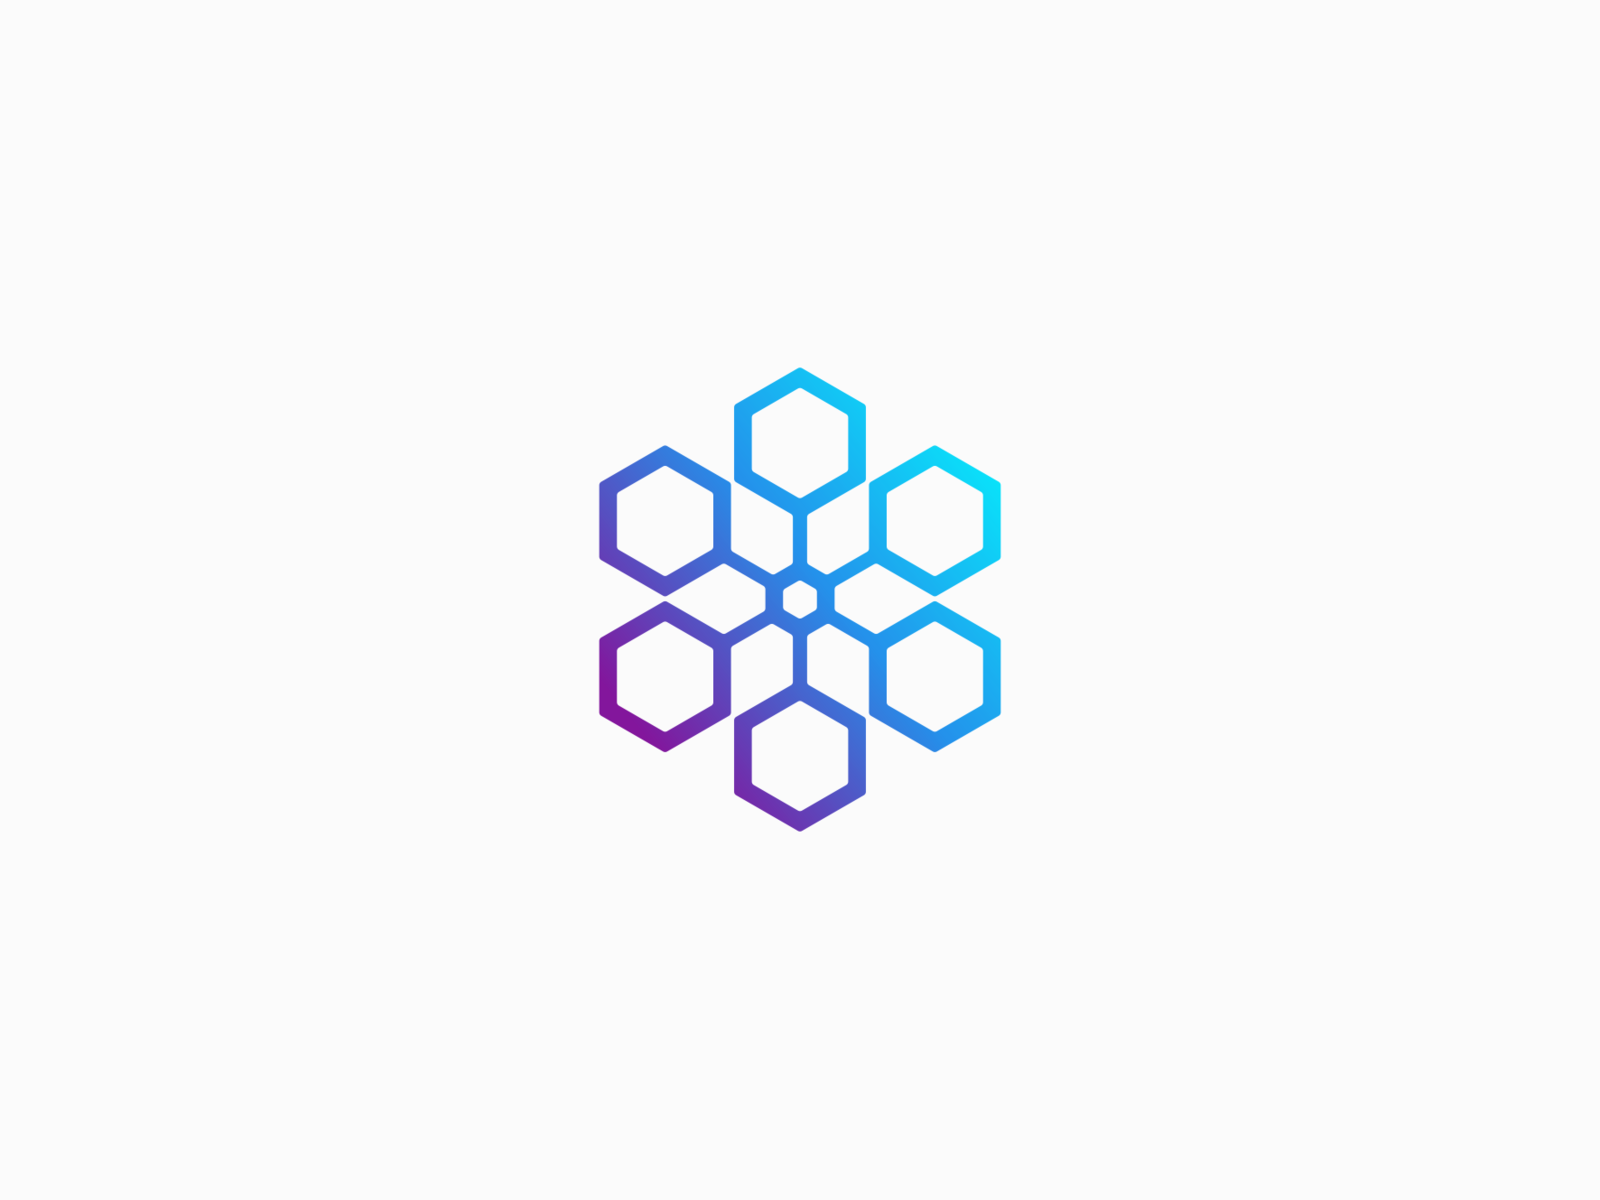 Hexagon+Hive Logo by Agny Hasya Studio on Dribbble